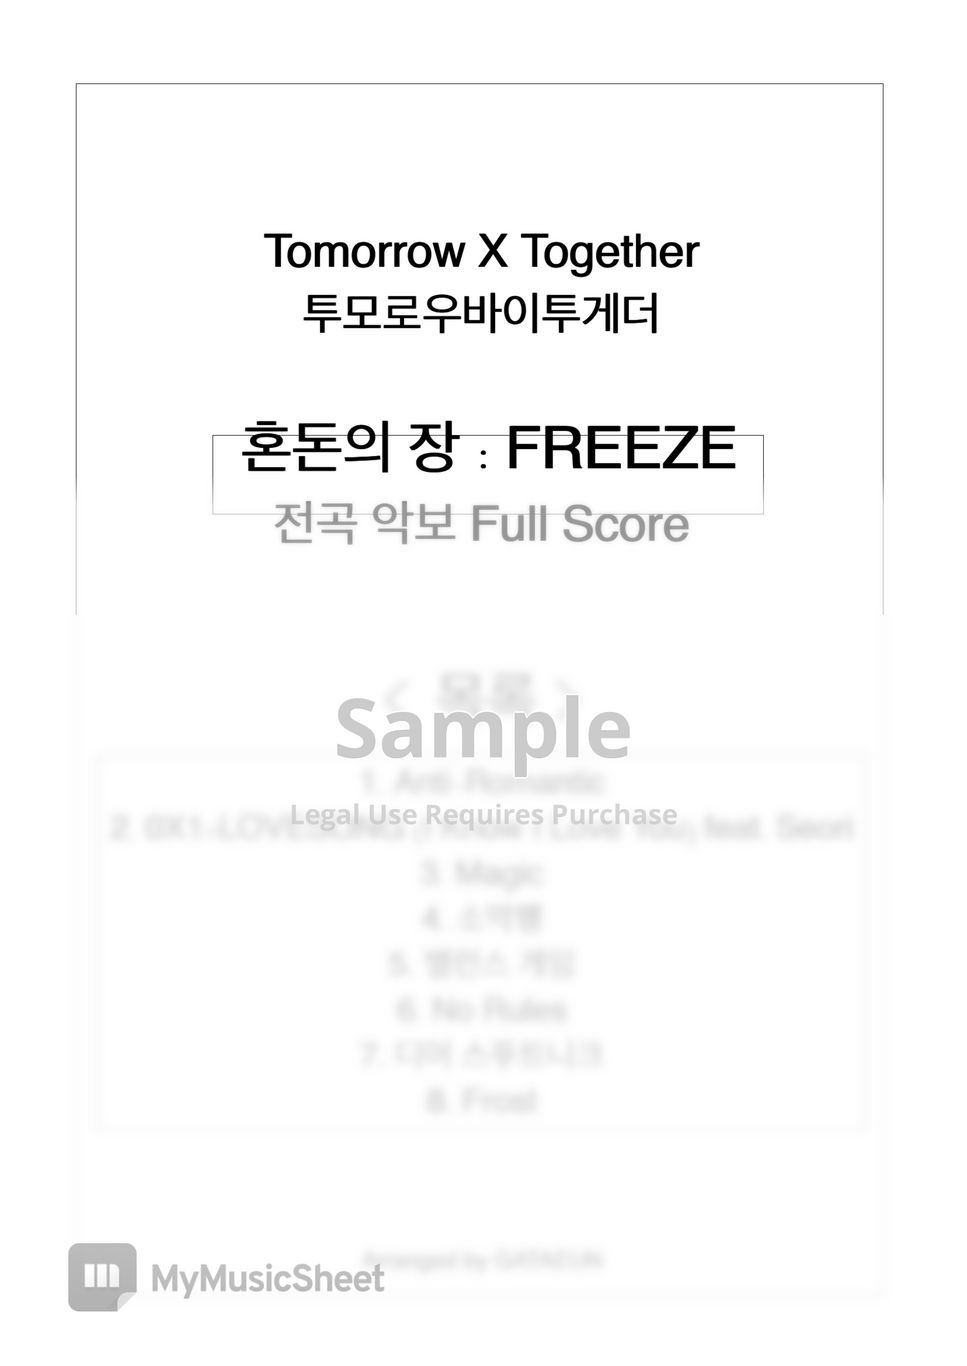 Tomorrow X Together - FREEZE Album Full Score (Lyrics 0, Cord 0) by GATAEUN